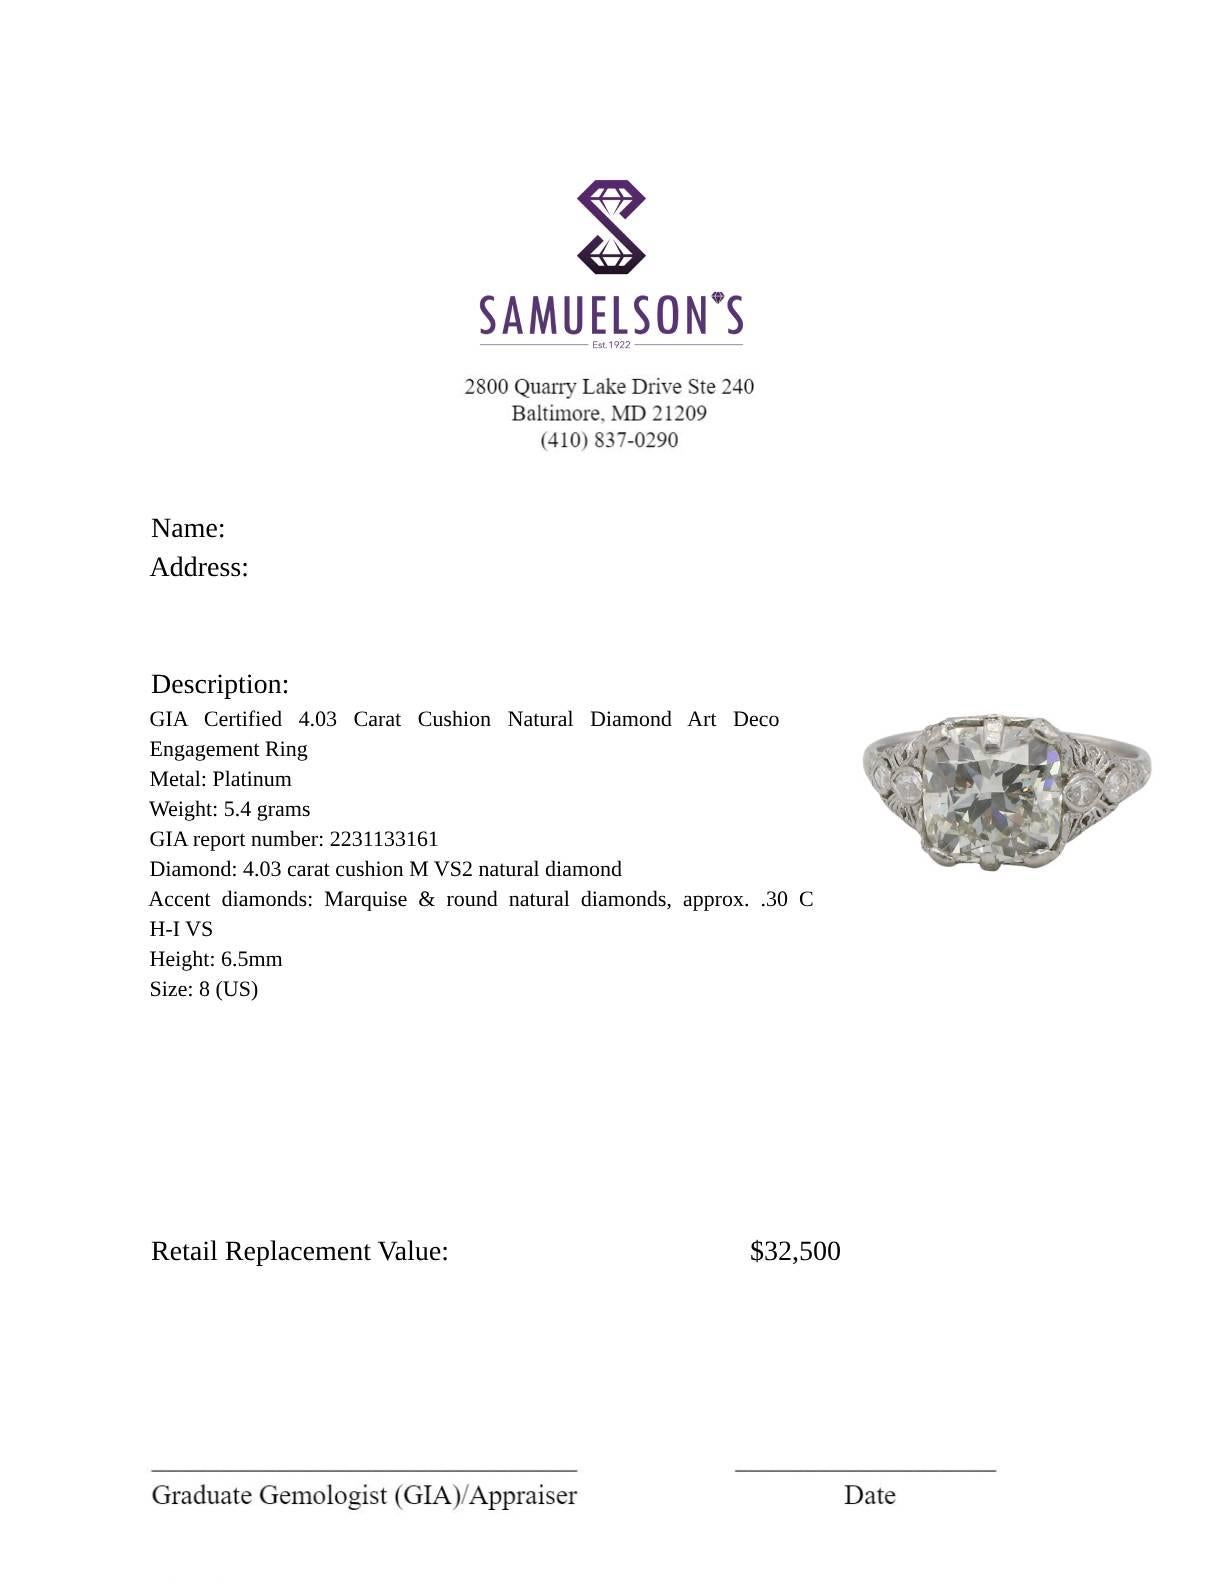 GIA Certified 4.03 Carat Cushion Natural Diamond Art Deco Engagement Ring 4